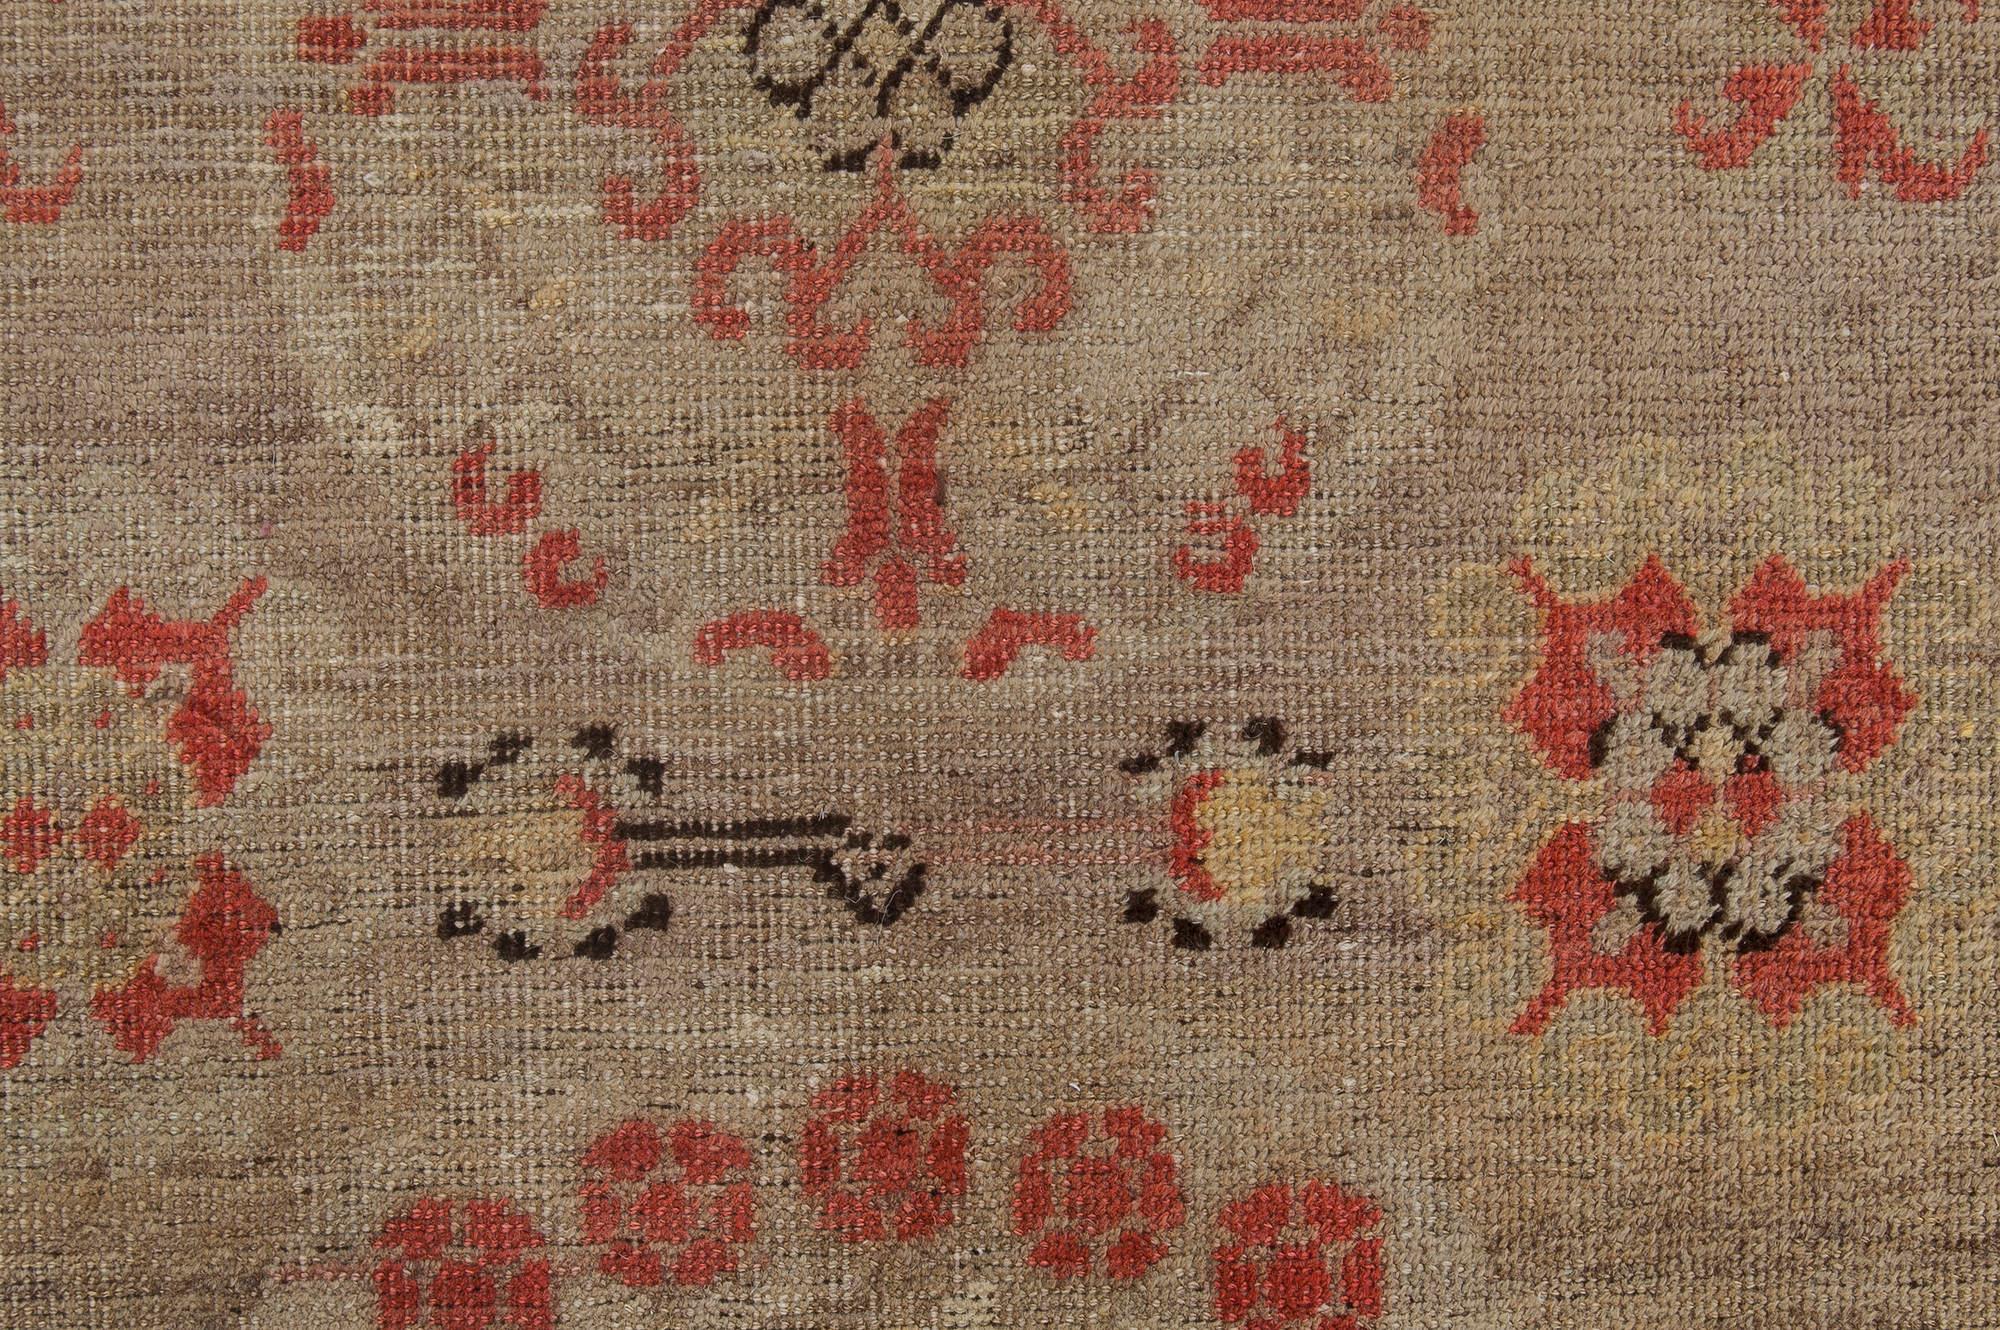 Vintage Samarkand handmade wool rug
Size: 4'4